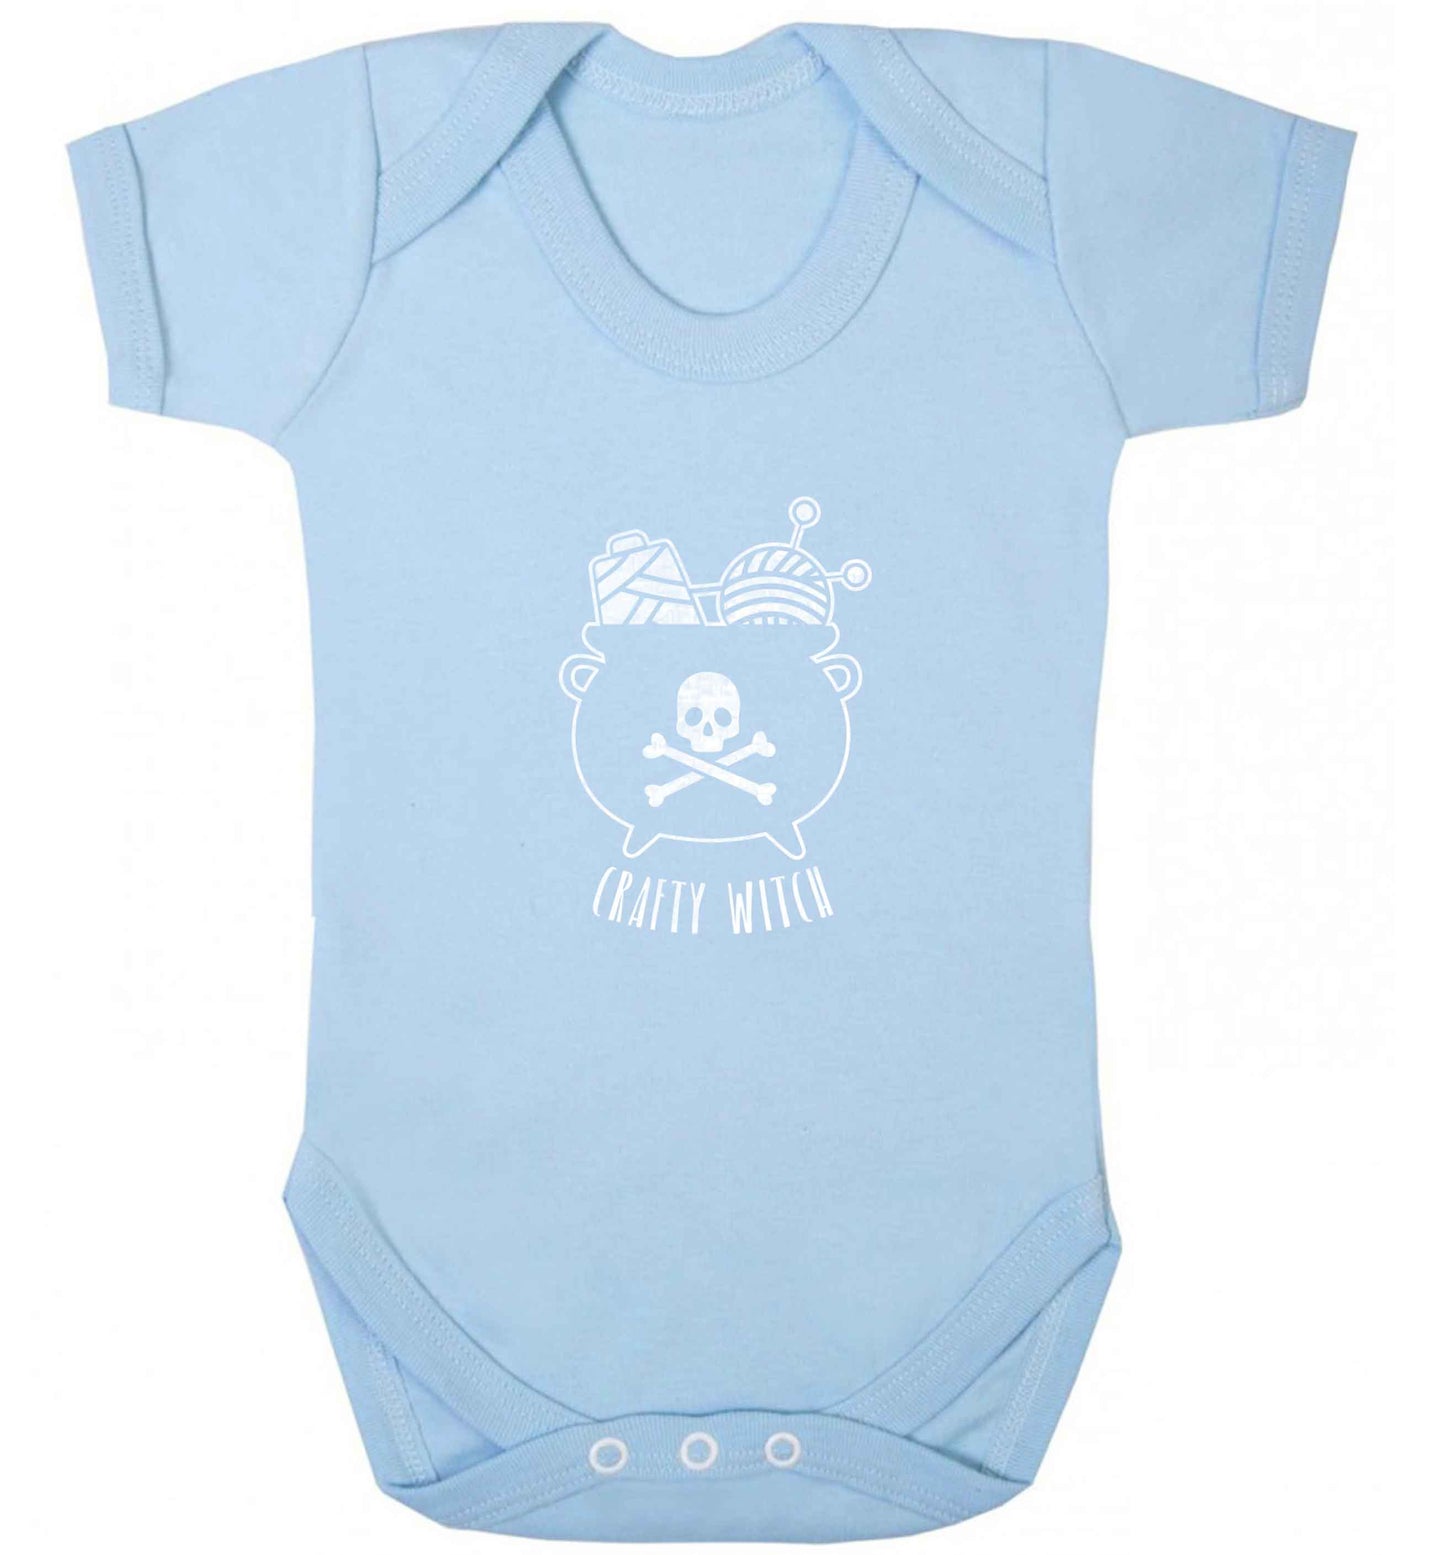 Crafty witch baby vest pale blue 18-24 months